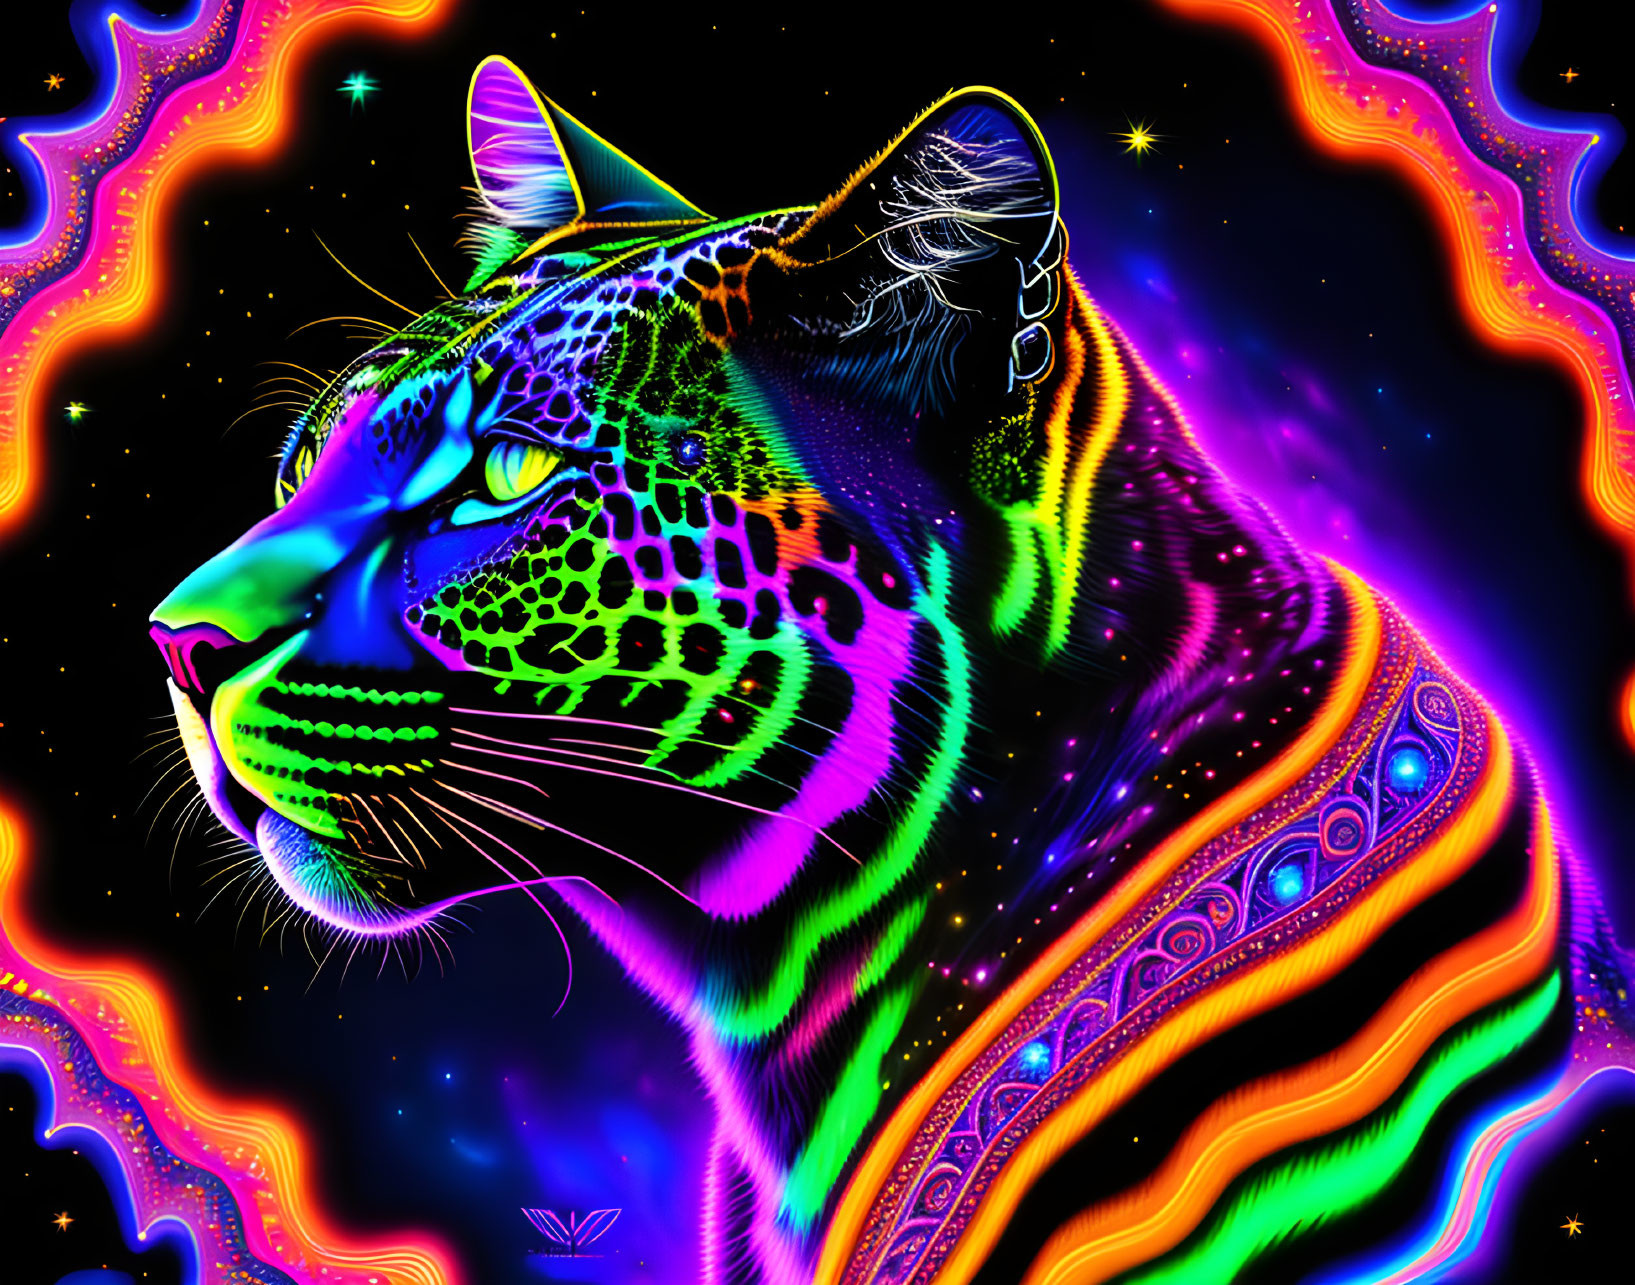 Neon-colored jaguar digital art with cosmic background